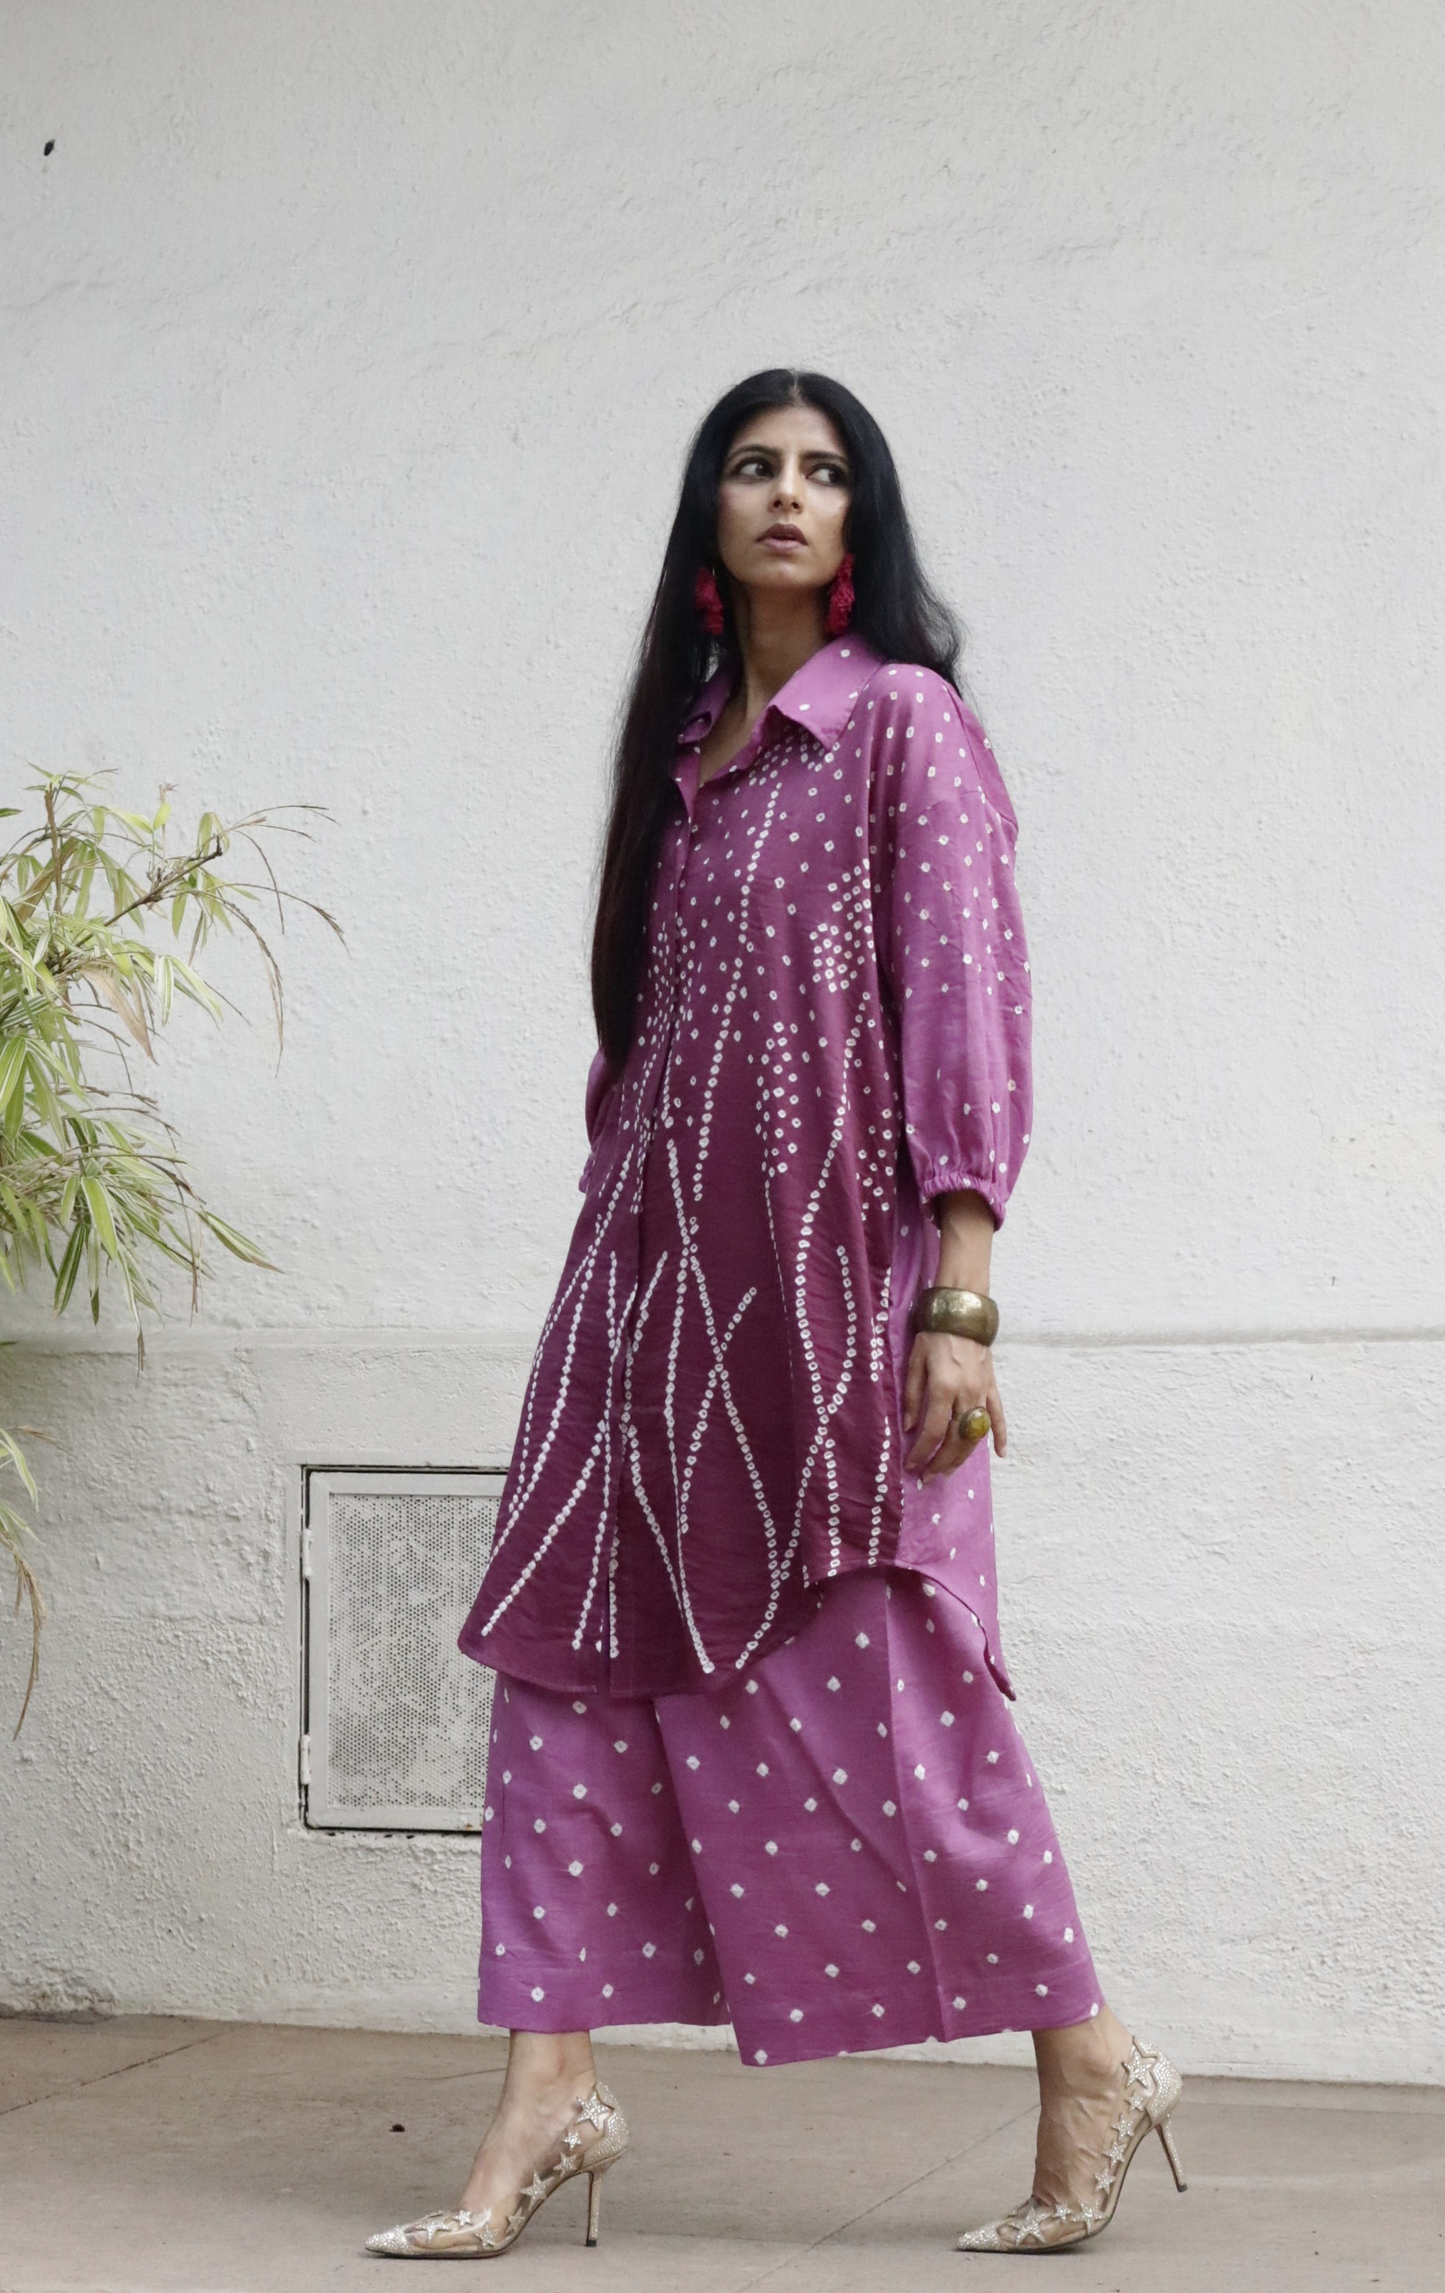 Bandhani 'Purple Rain' Cotton Co-ord Set In Purple Ombre: Buy Kurta Palazzo Cotton Co-ord Set